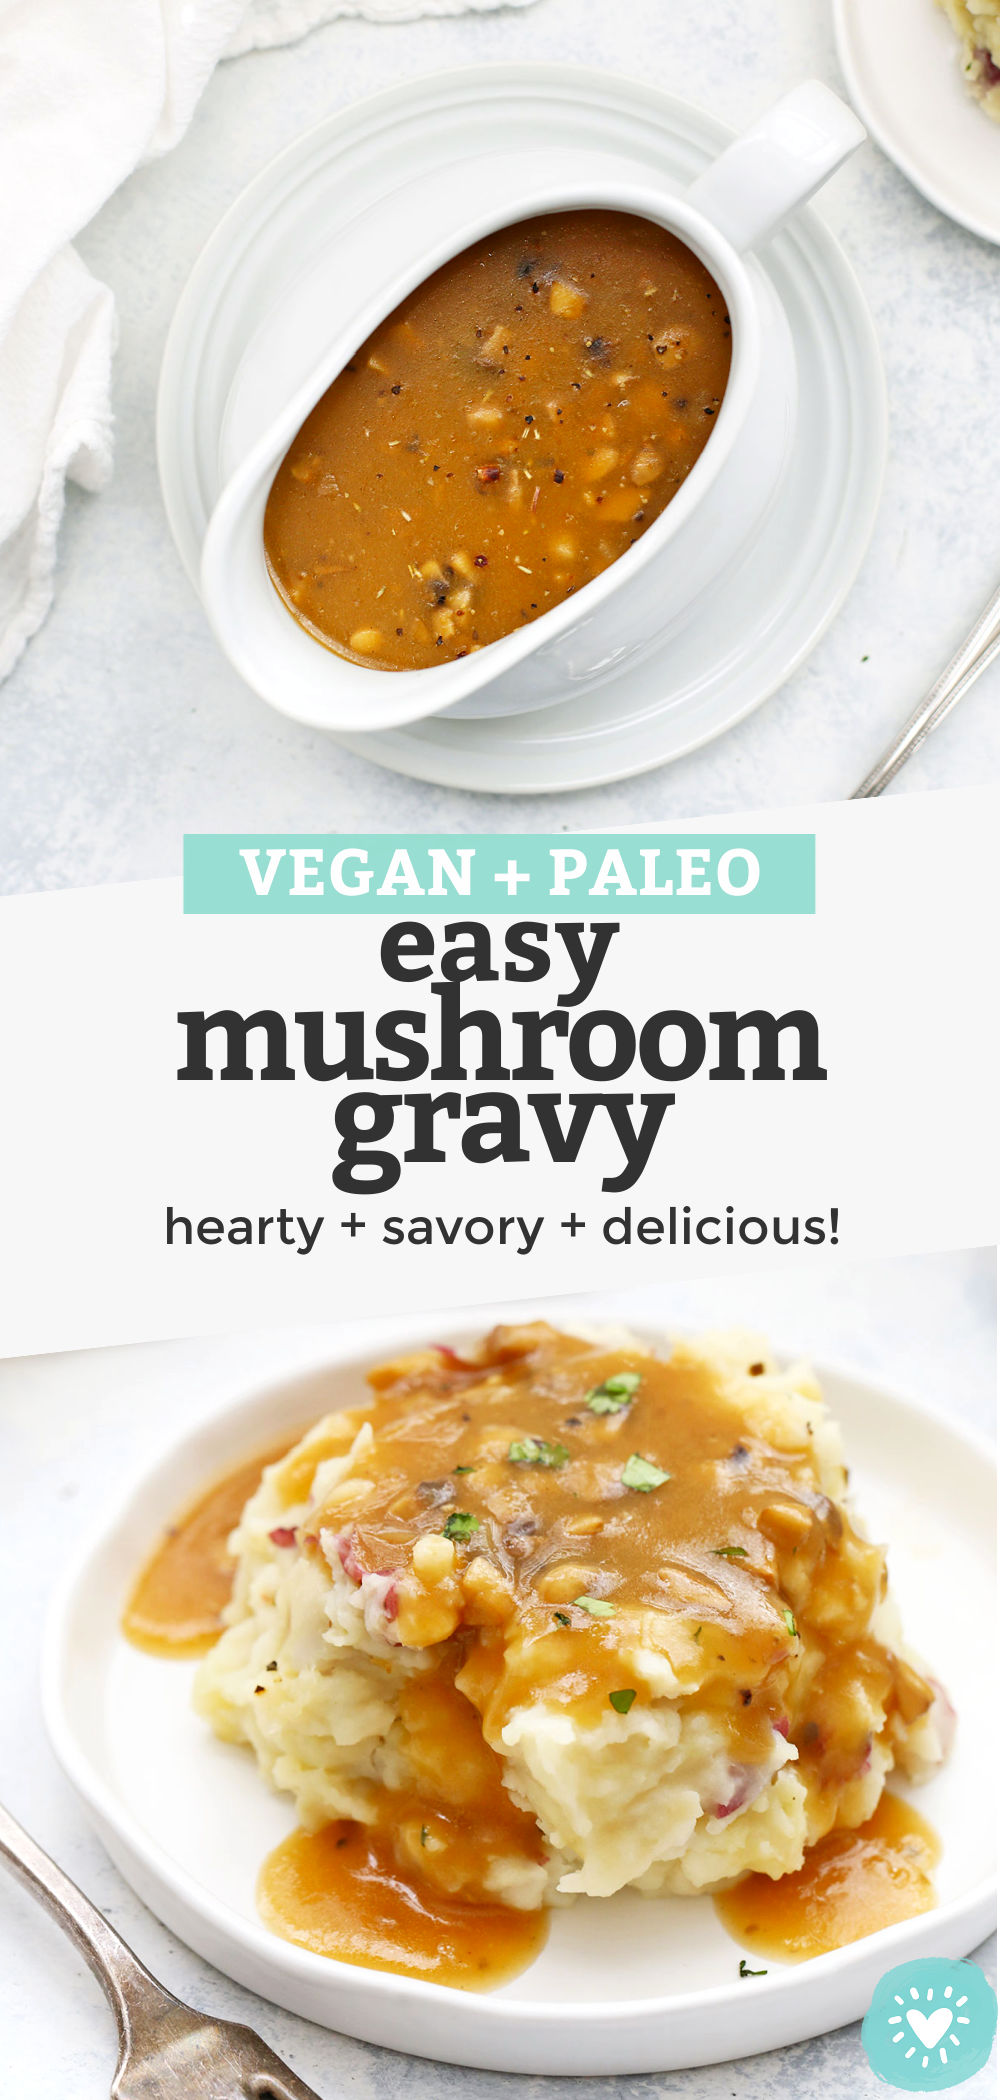 Easy Mushroom Gravy - This simple mushroom gravy recipe works for vegetarian, paleo, and gluten-free diets! It's amazing on mashed potatoes or spooned over your main dish. (Vegan, Paleo, Gluten-Free Options) // Mushroom gravy recipe // vegan mushroom gravy // paleo mushroom gravy // gluten free gravy recipe #gravy #glutenfree #mushroomgravy #thanksgiving #vegan #paleo #dairyfree